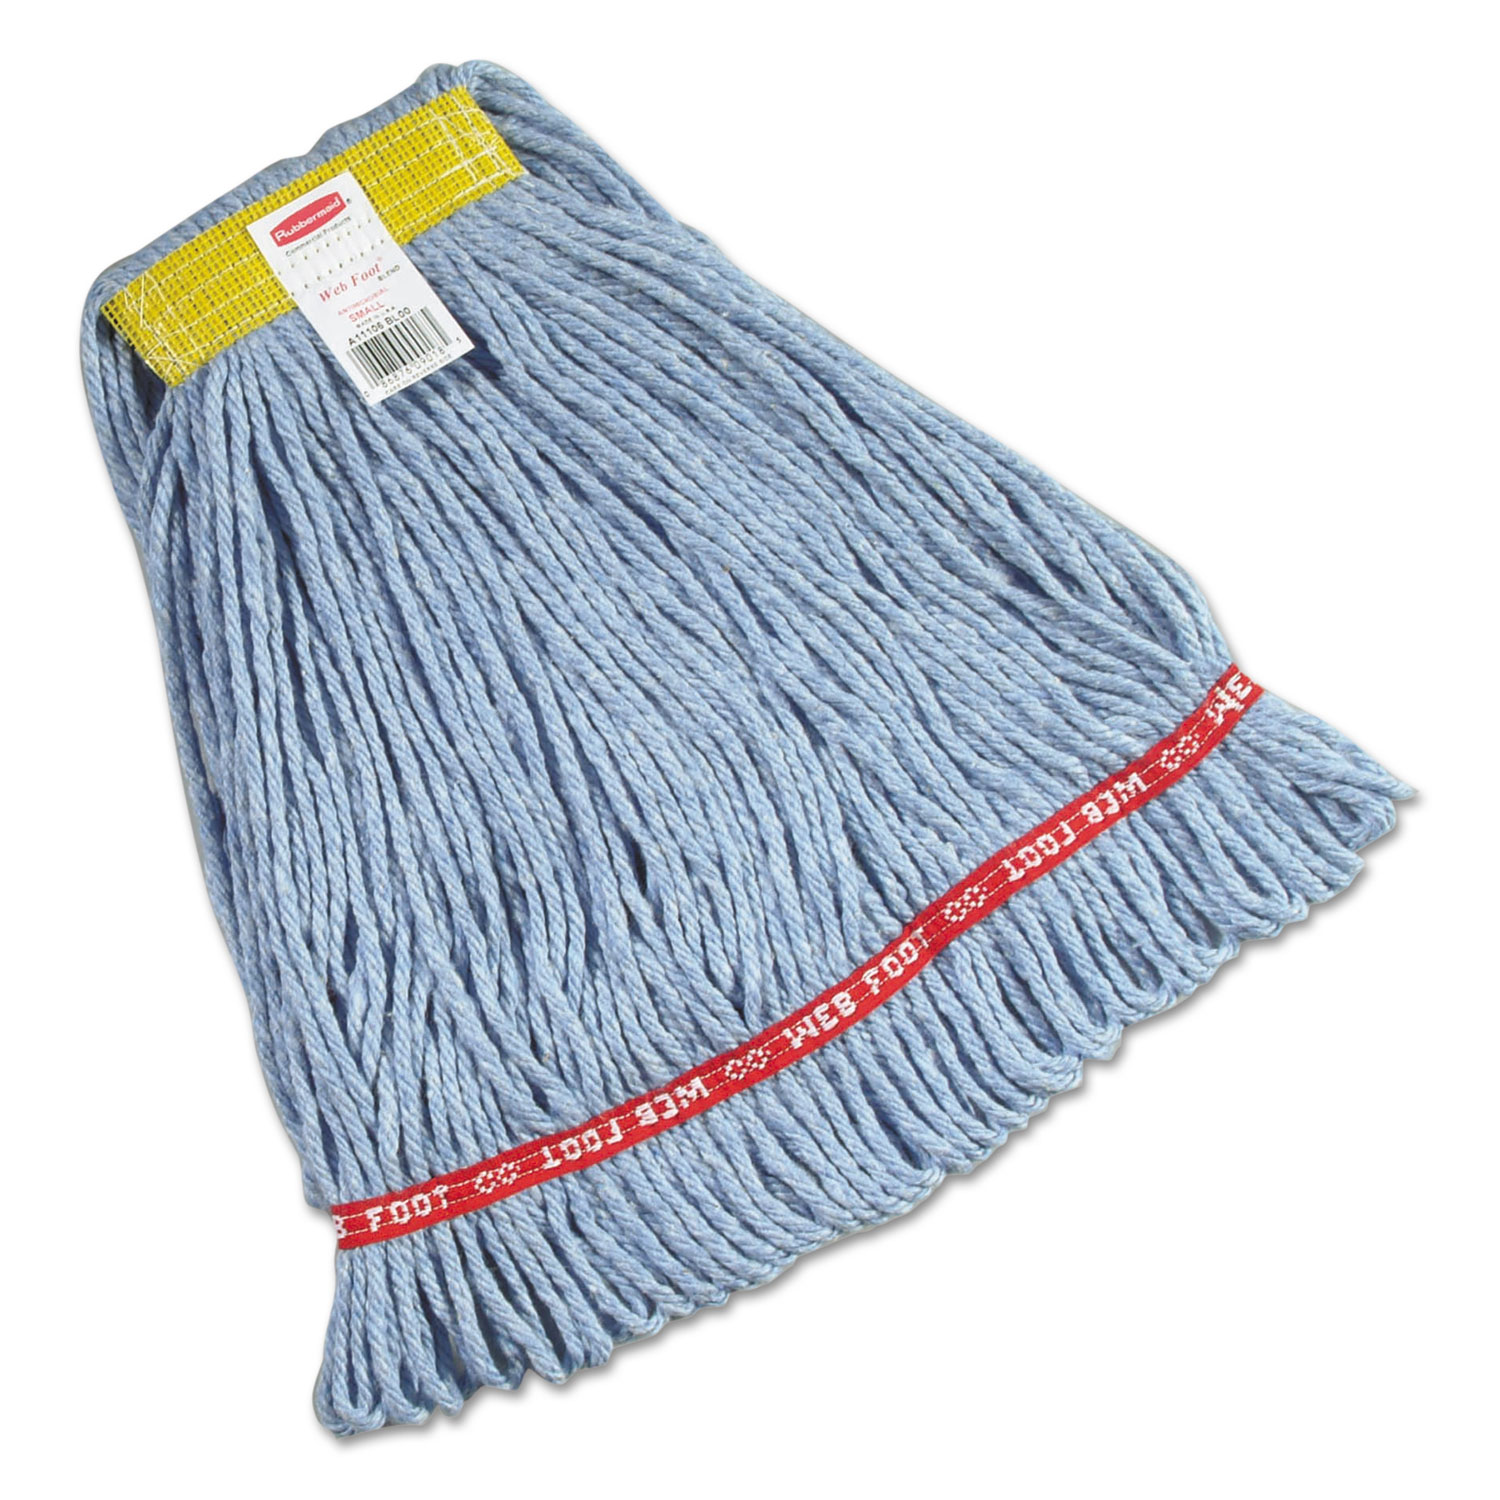  Rubbermaid Commercial FGA11106BL00 Web Foot Wet Mops, Cotton/Synthetic, Blue, Small, 1 Yellow Headband, 6/Carton (RCPA111BLU) 